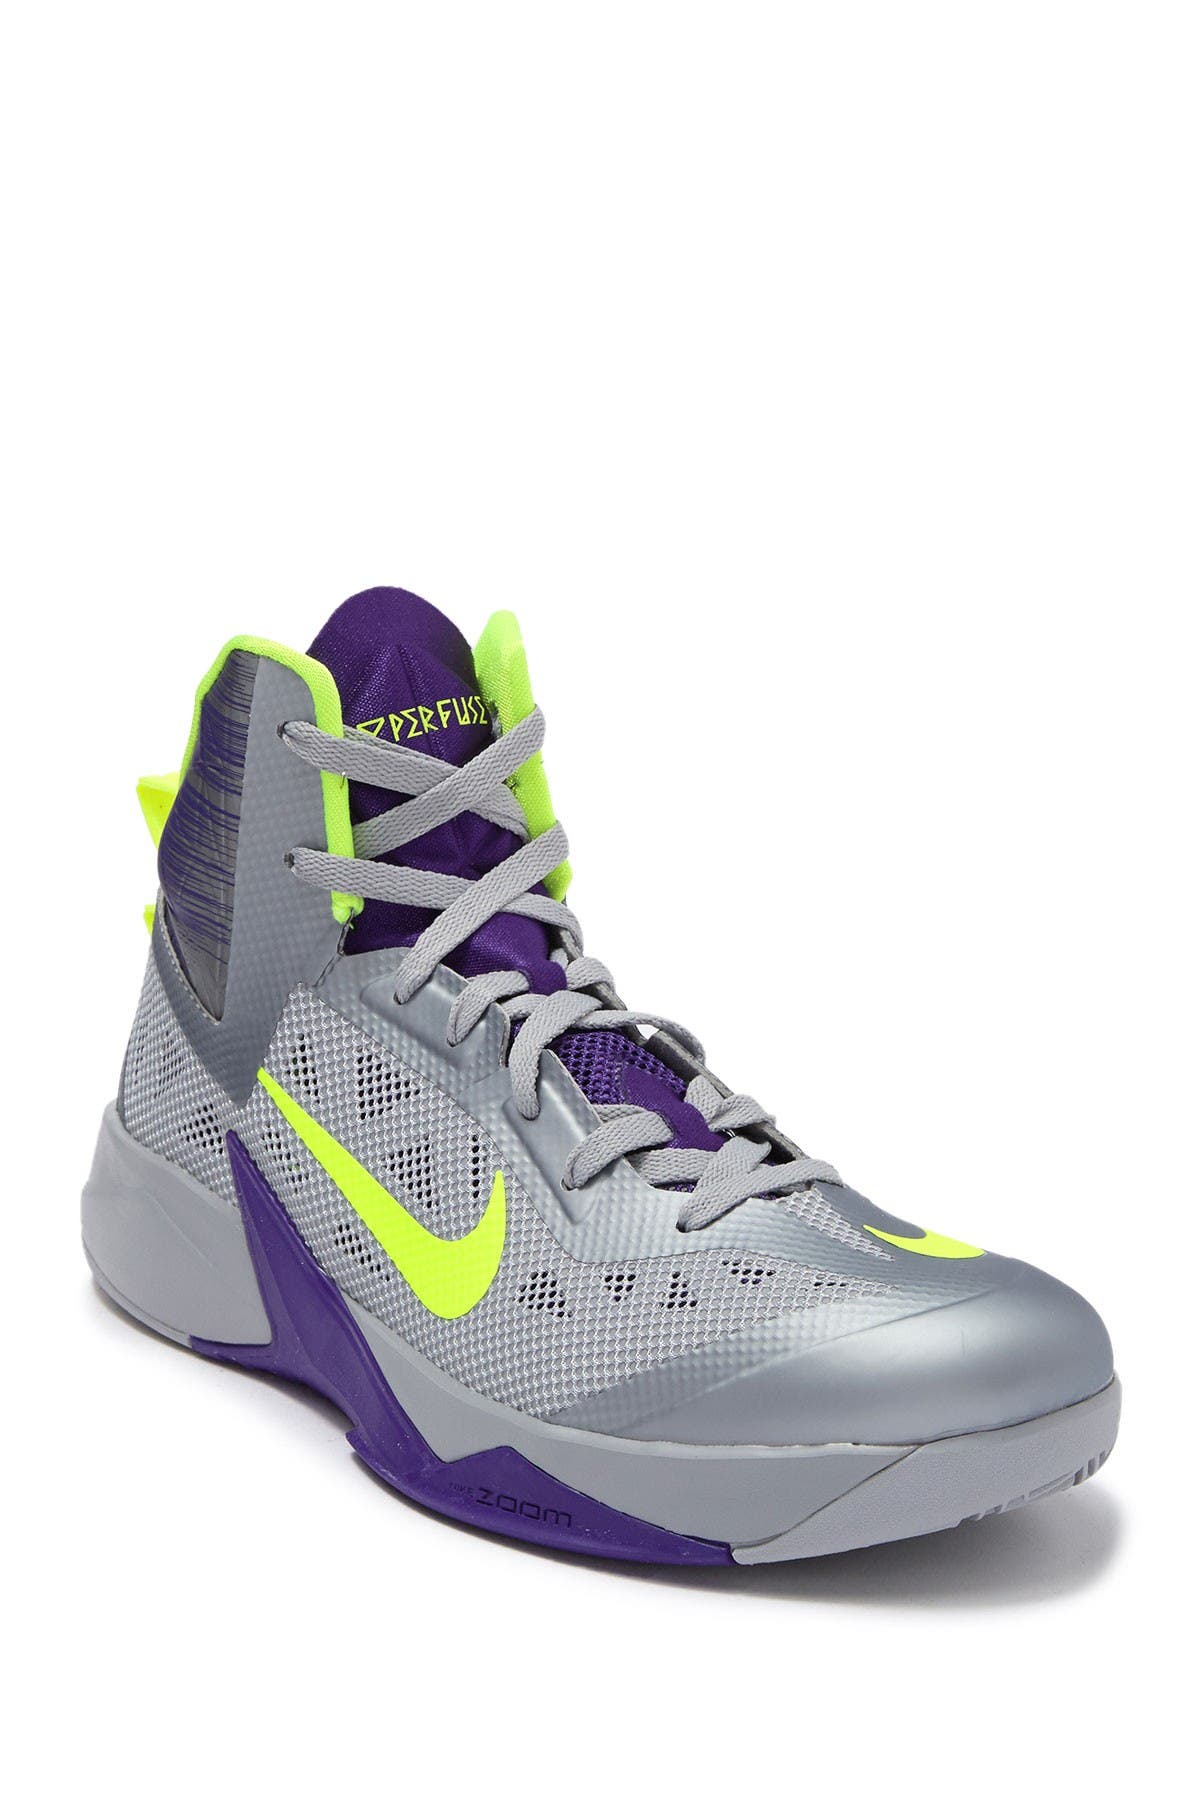 nike zoom basketball shoes 2013